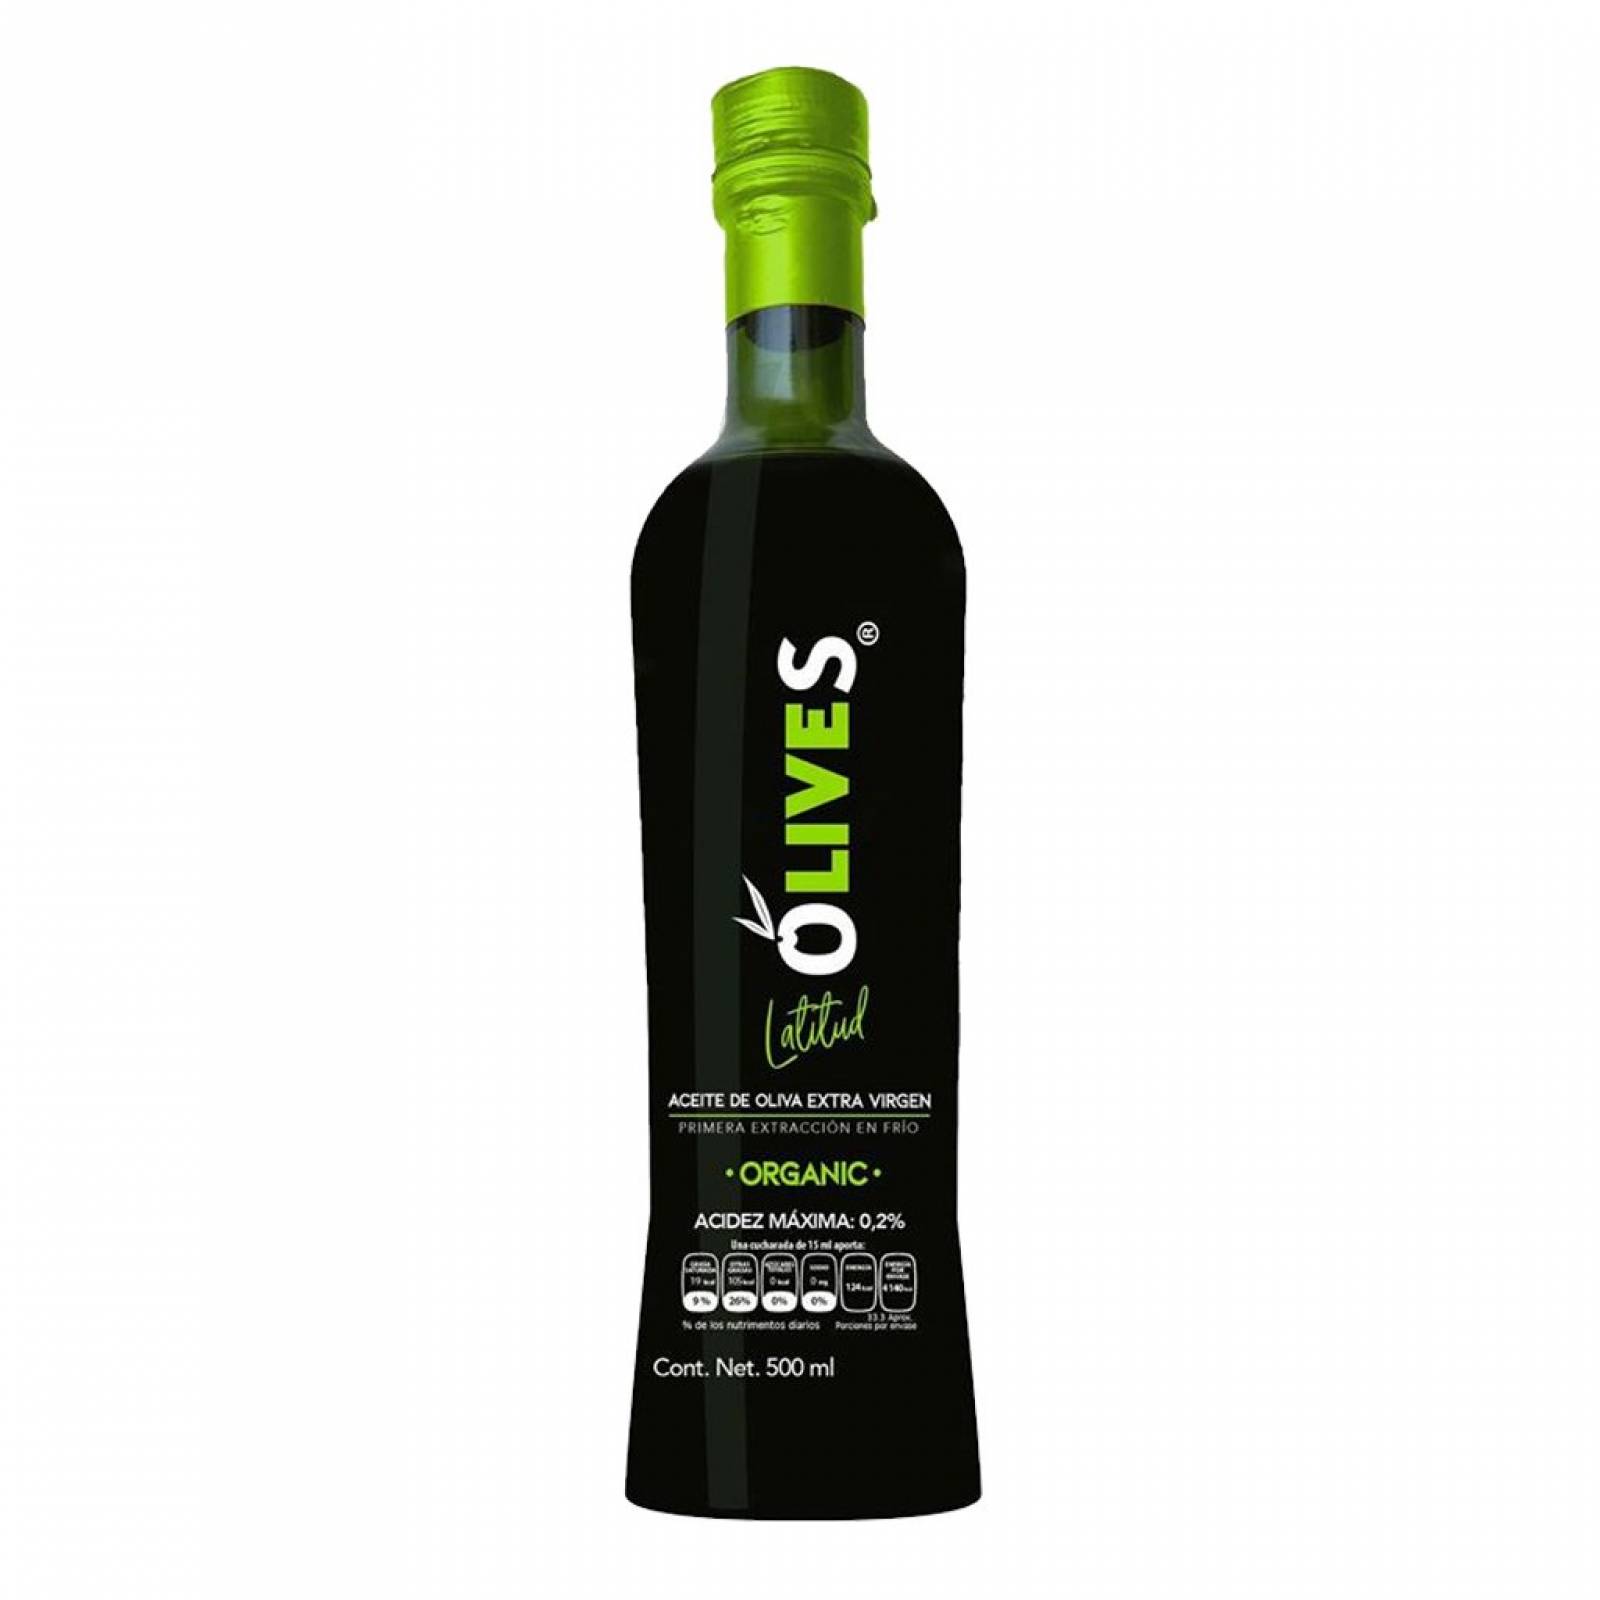 Olives Latitud Aceite de Oliva Virgen Extra Orgánico 500 ml